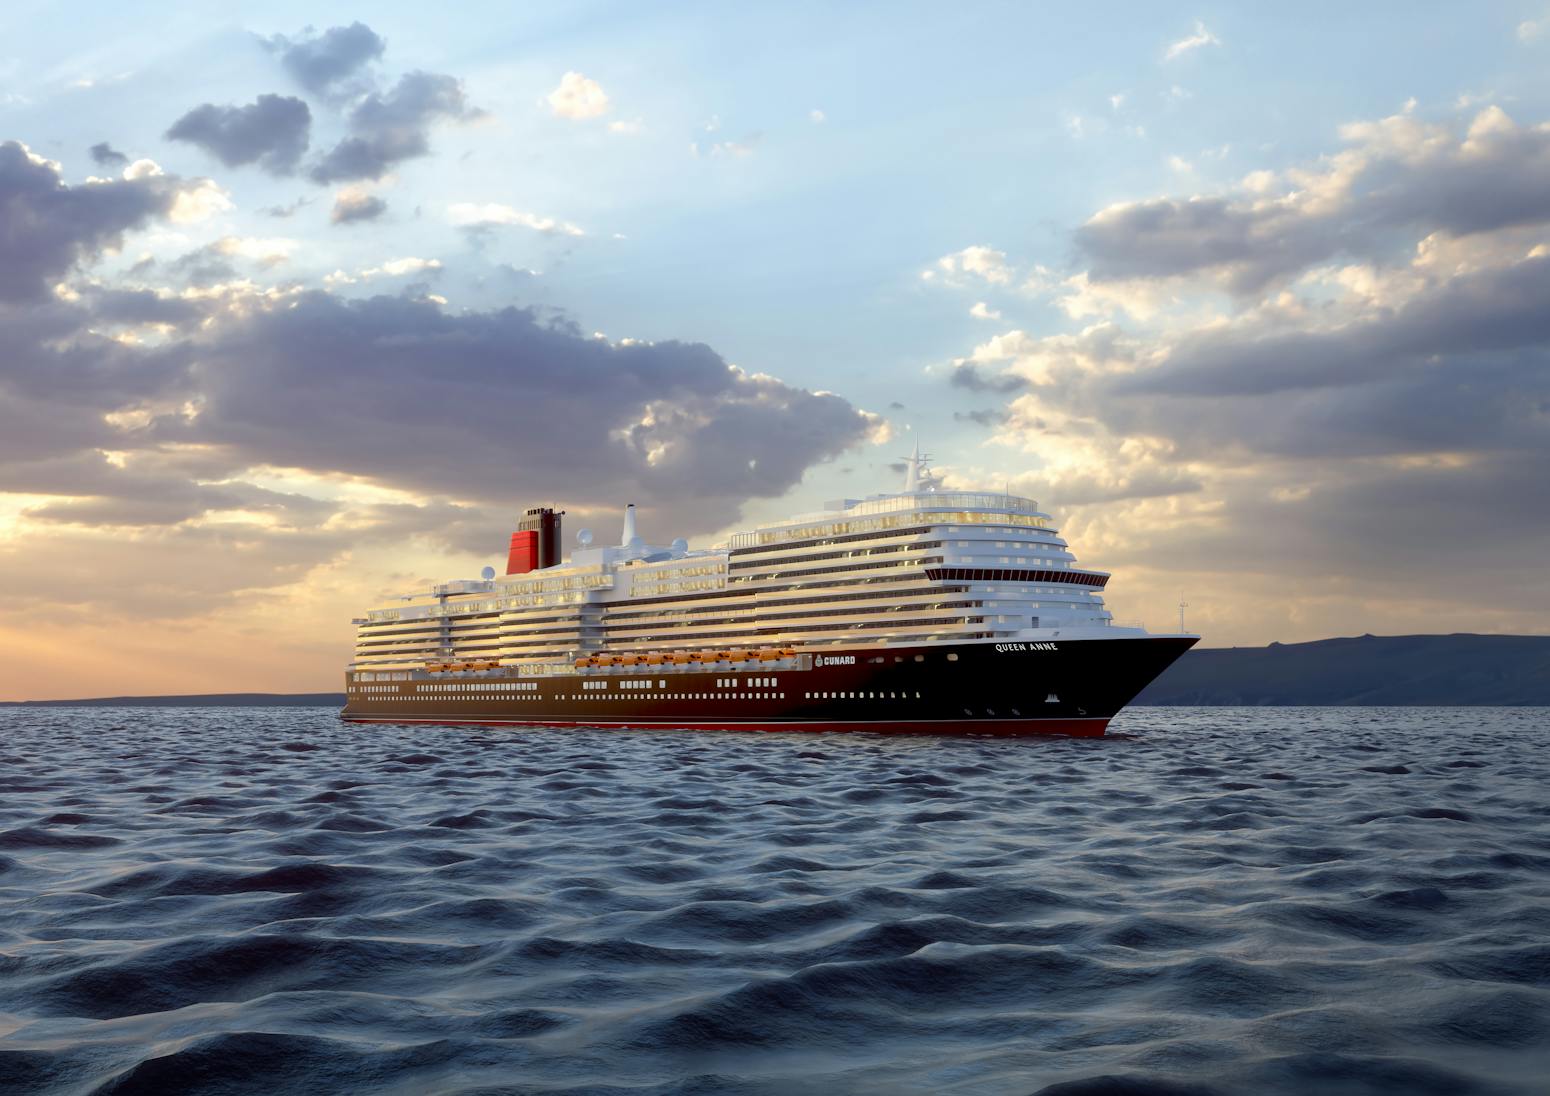 Cunard Queen Anne